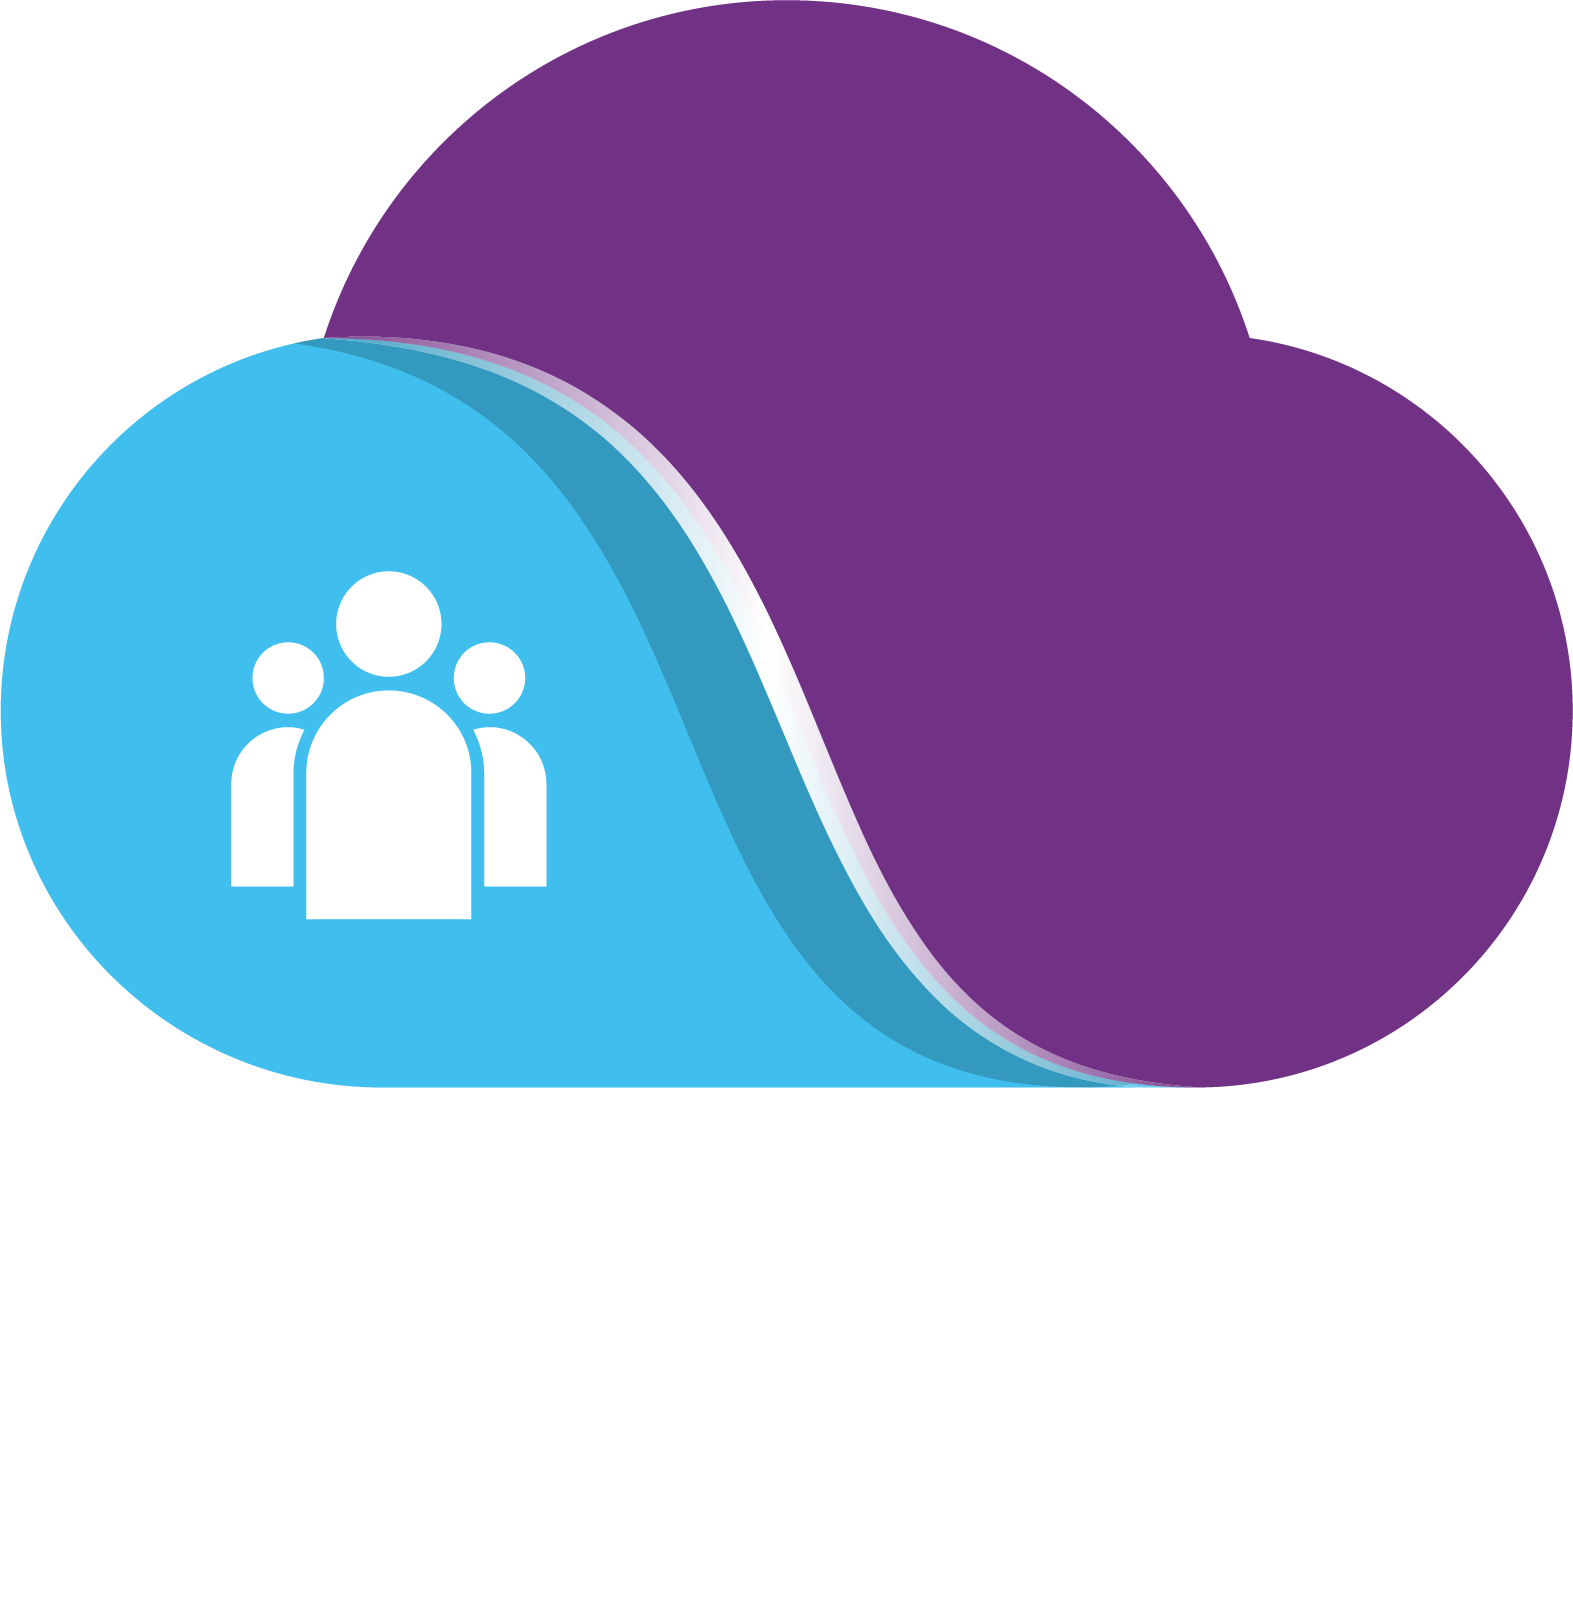 CloudDirect Manage